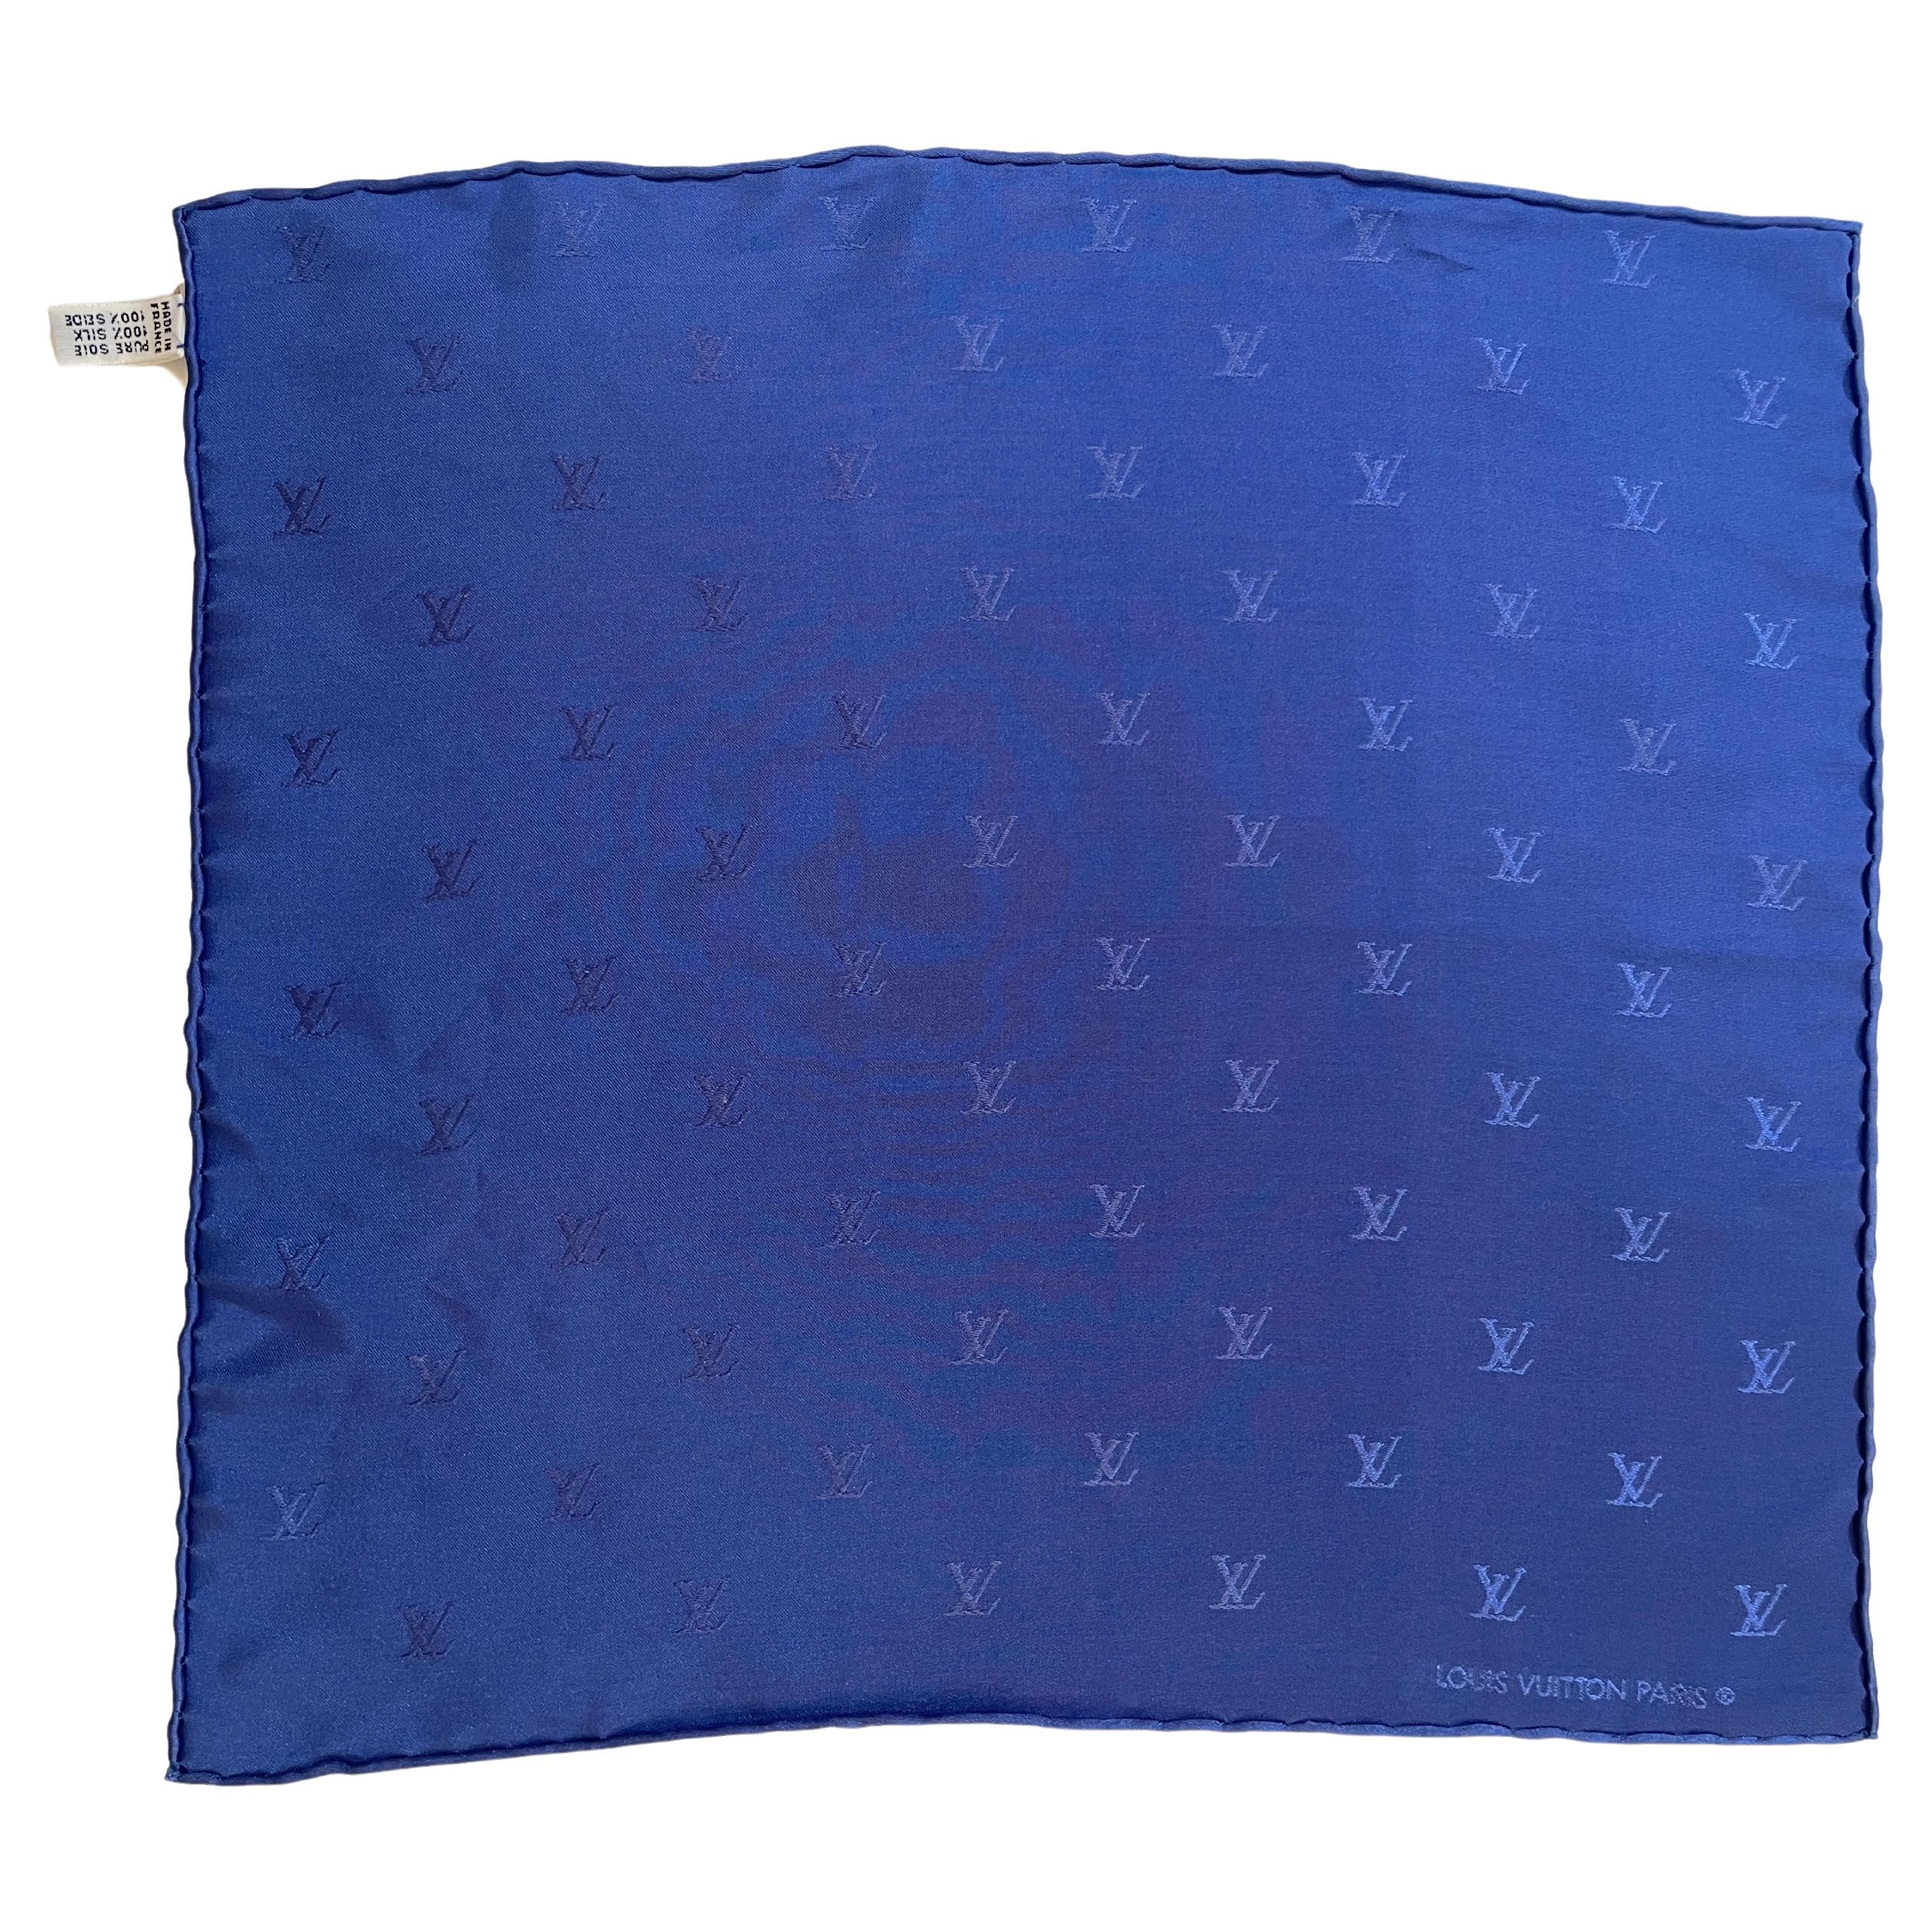 Louis Vuitton Royal Blue Silk Pocket Monogram Square.
Louis Vuitton handkerchief Scarf Monogram pattern silk pocket square.
100% silk finished with hand rolled edges.
The pocket square is royal blue and monogram LV pattern all over.
Made in